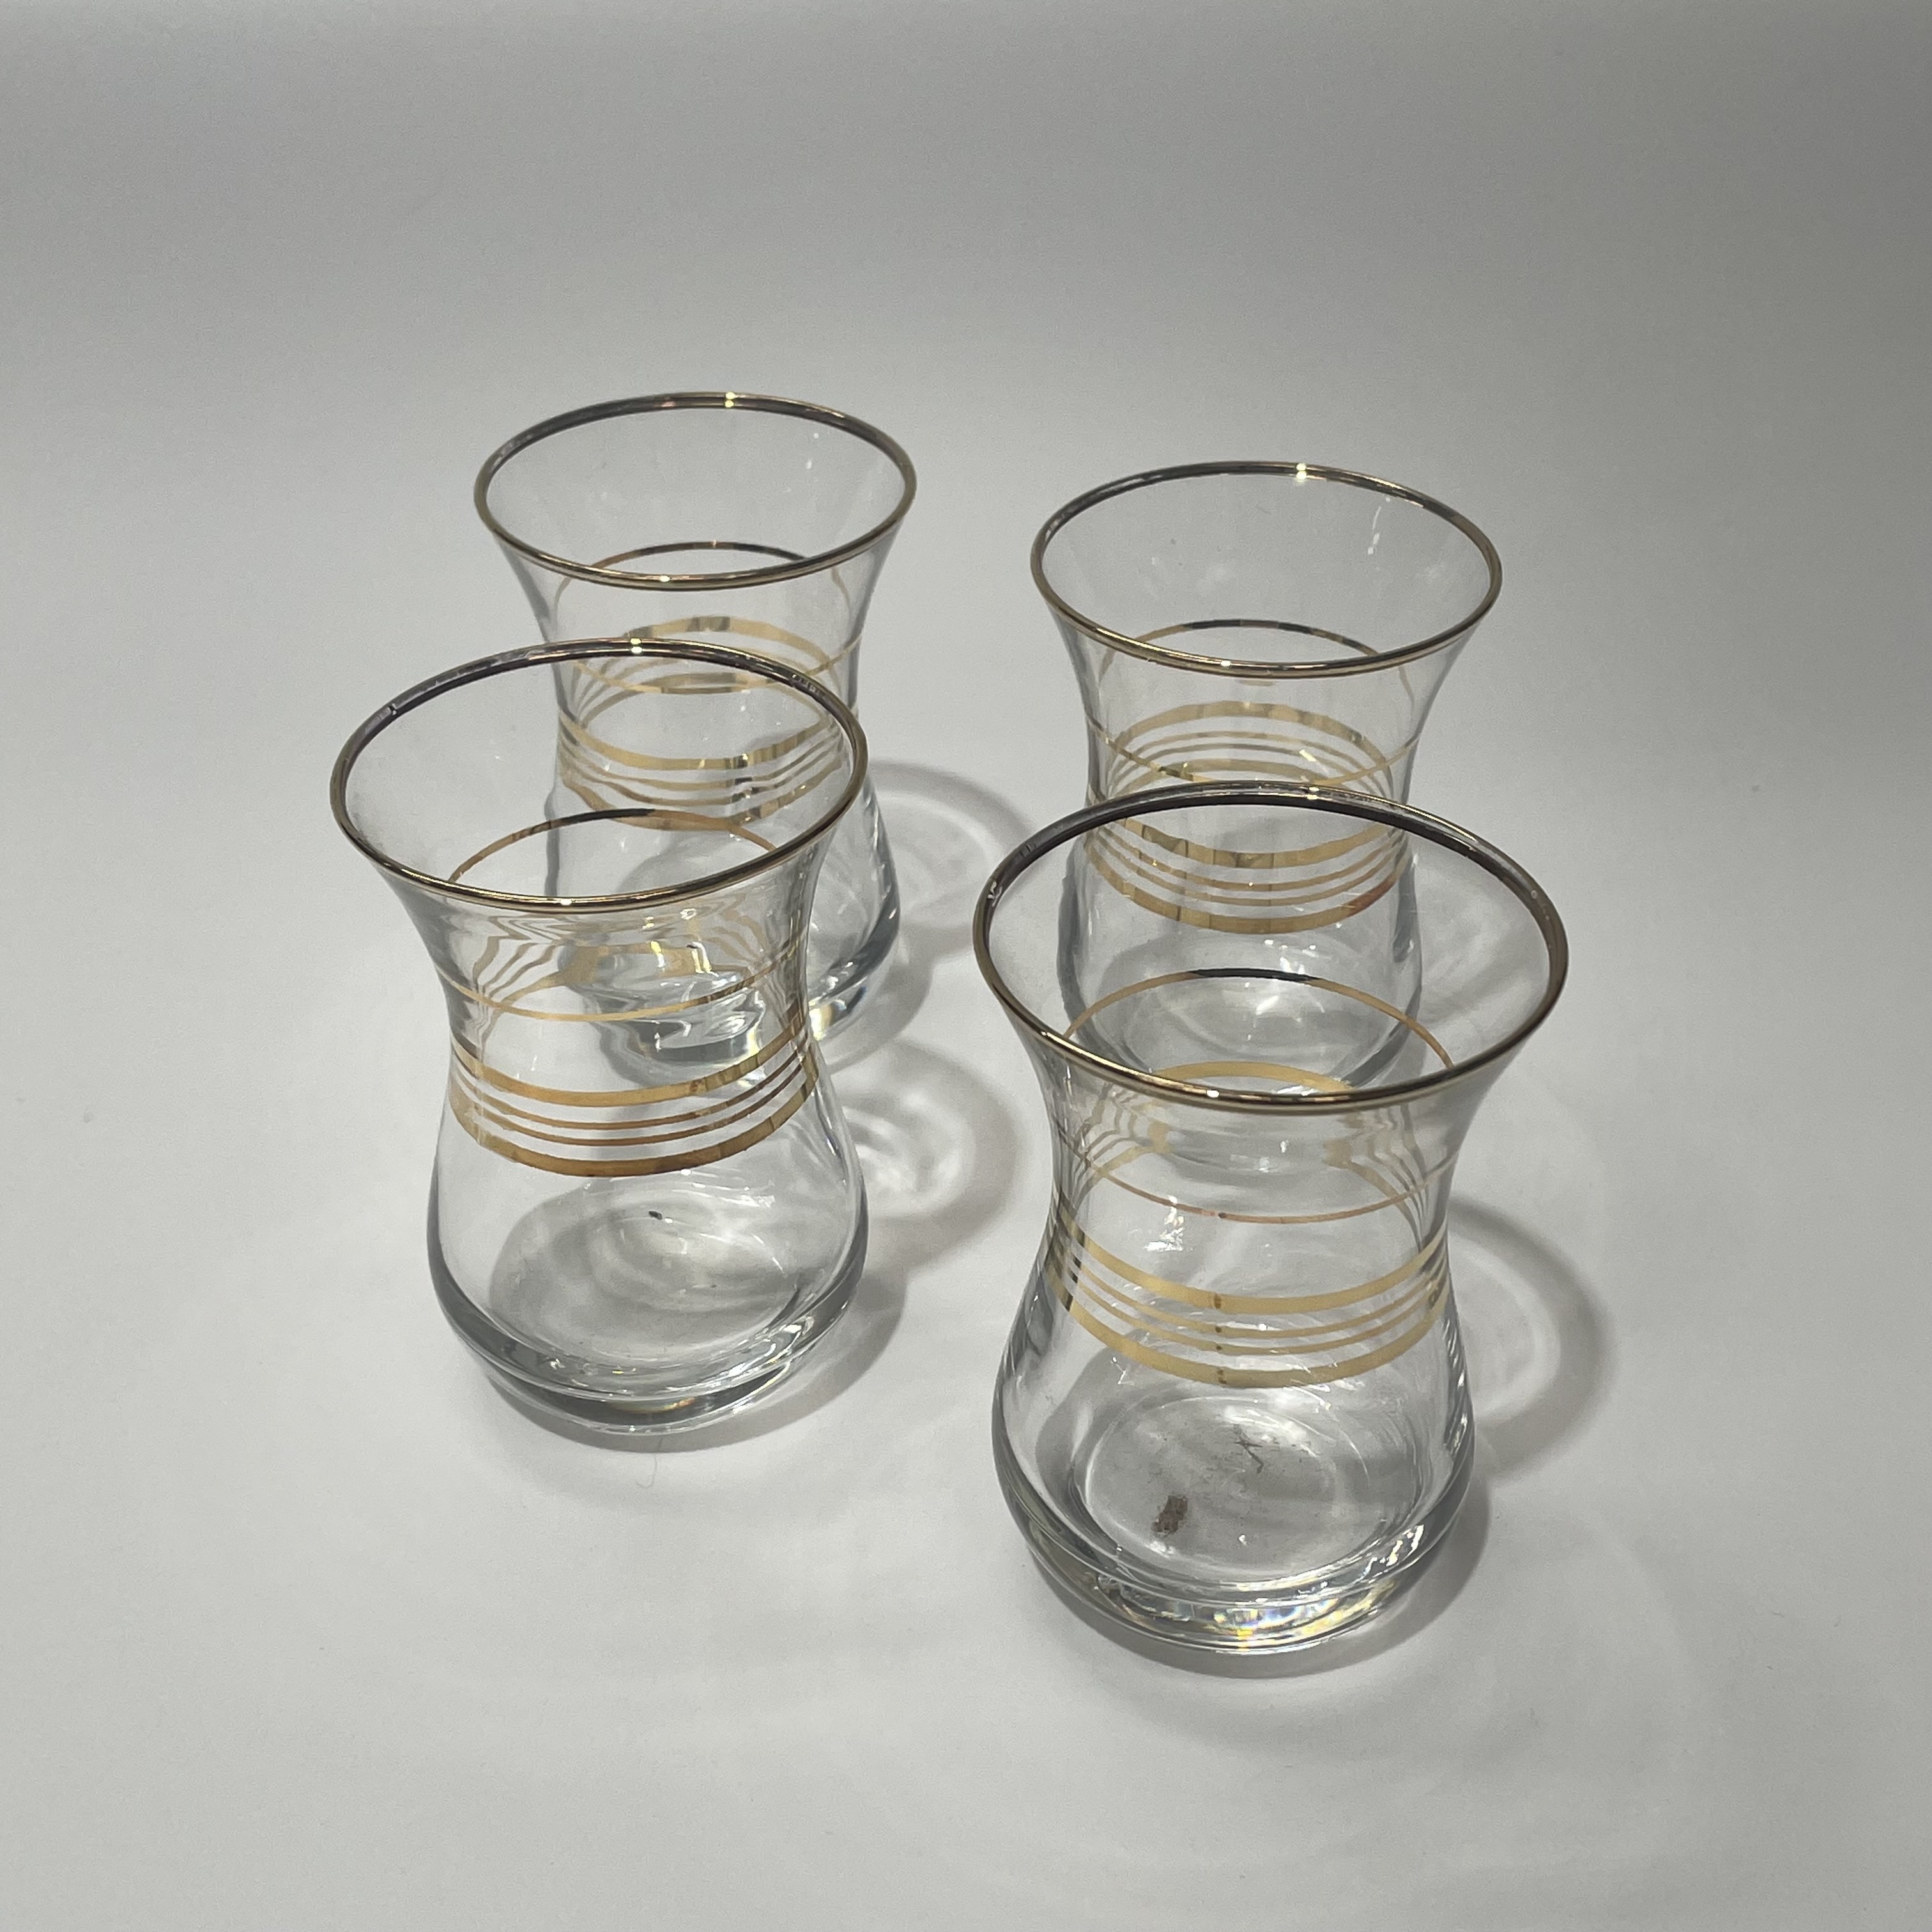 GLASS, Clear glass with gold trim, 4 piece set